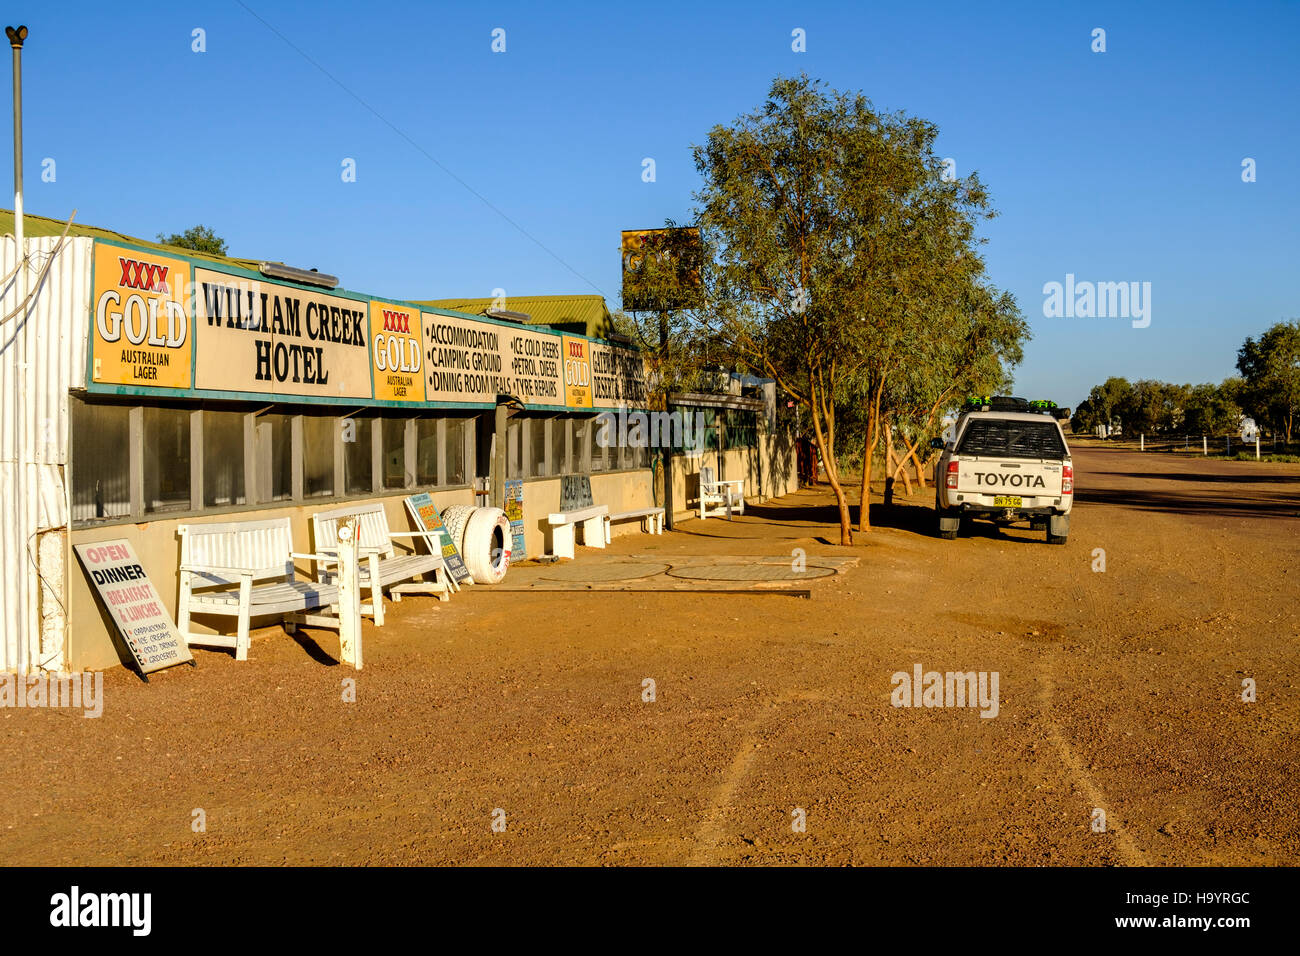 The William Creek Hotel in Australia's smallest town, William Creek in Outback South Australia. Stock Photo